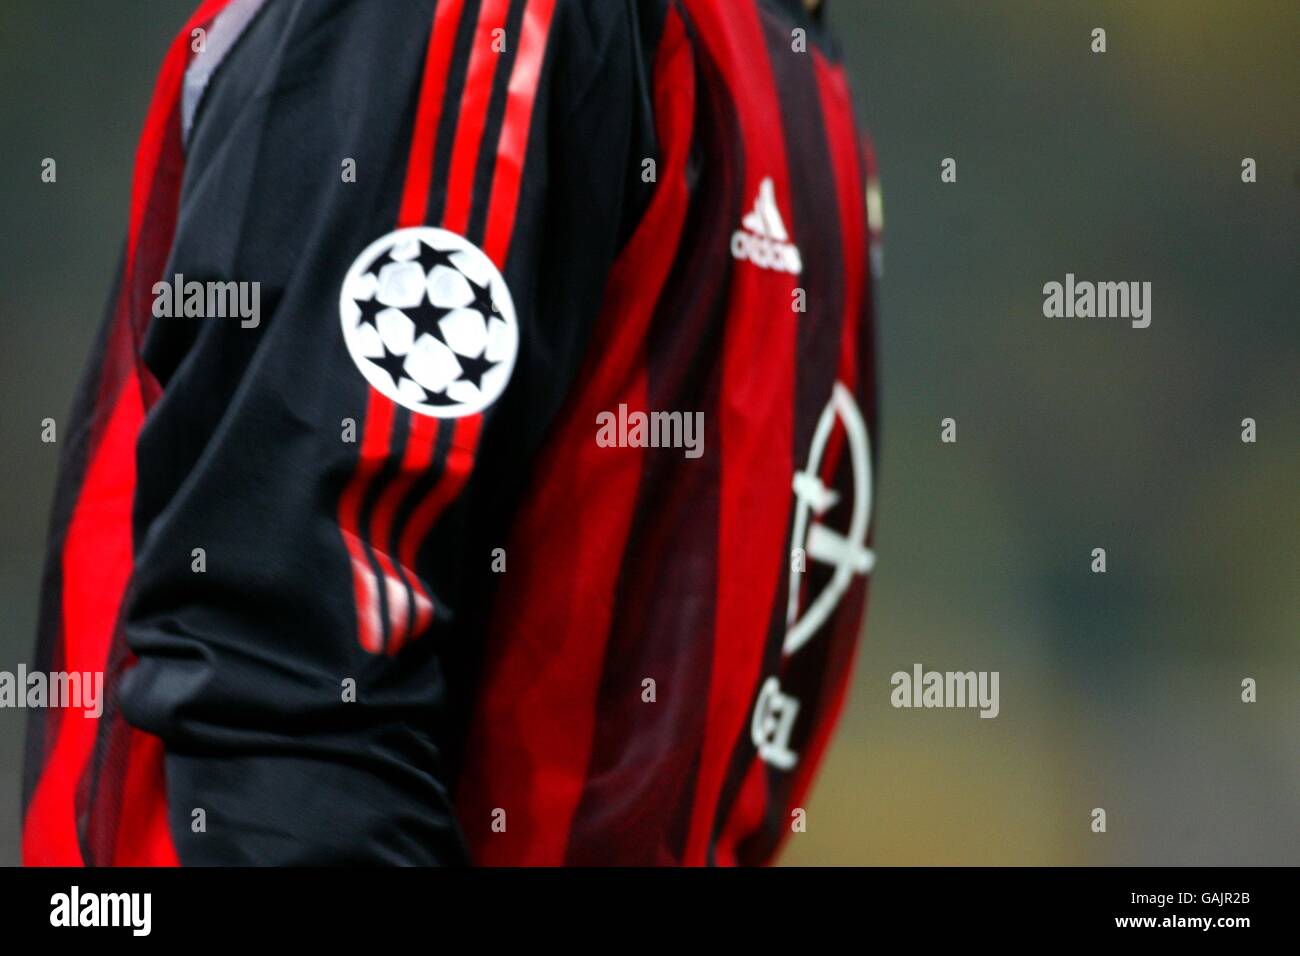 Soccer - UEFA Champions League - Group C - Borussia Dortmund v AC Milan. The starball logo on the sleeve of the AC Milan shirt Stock Photo